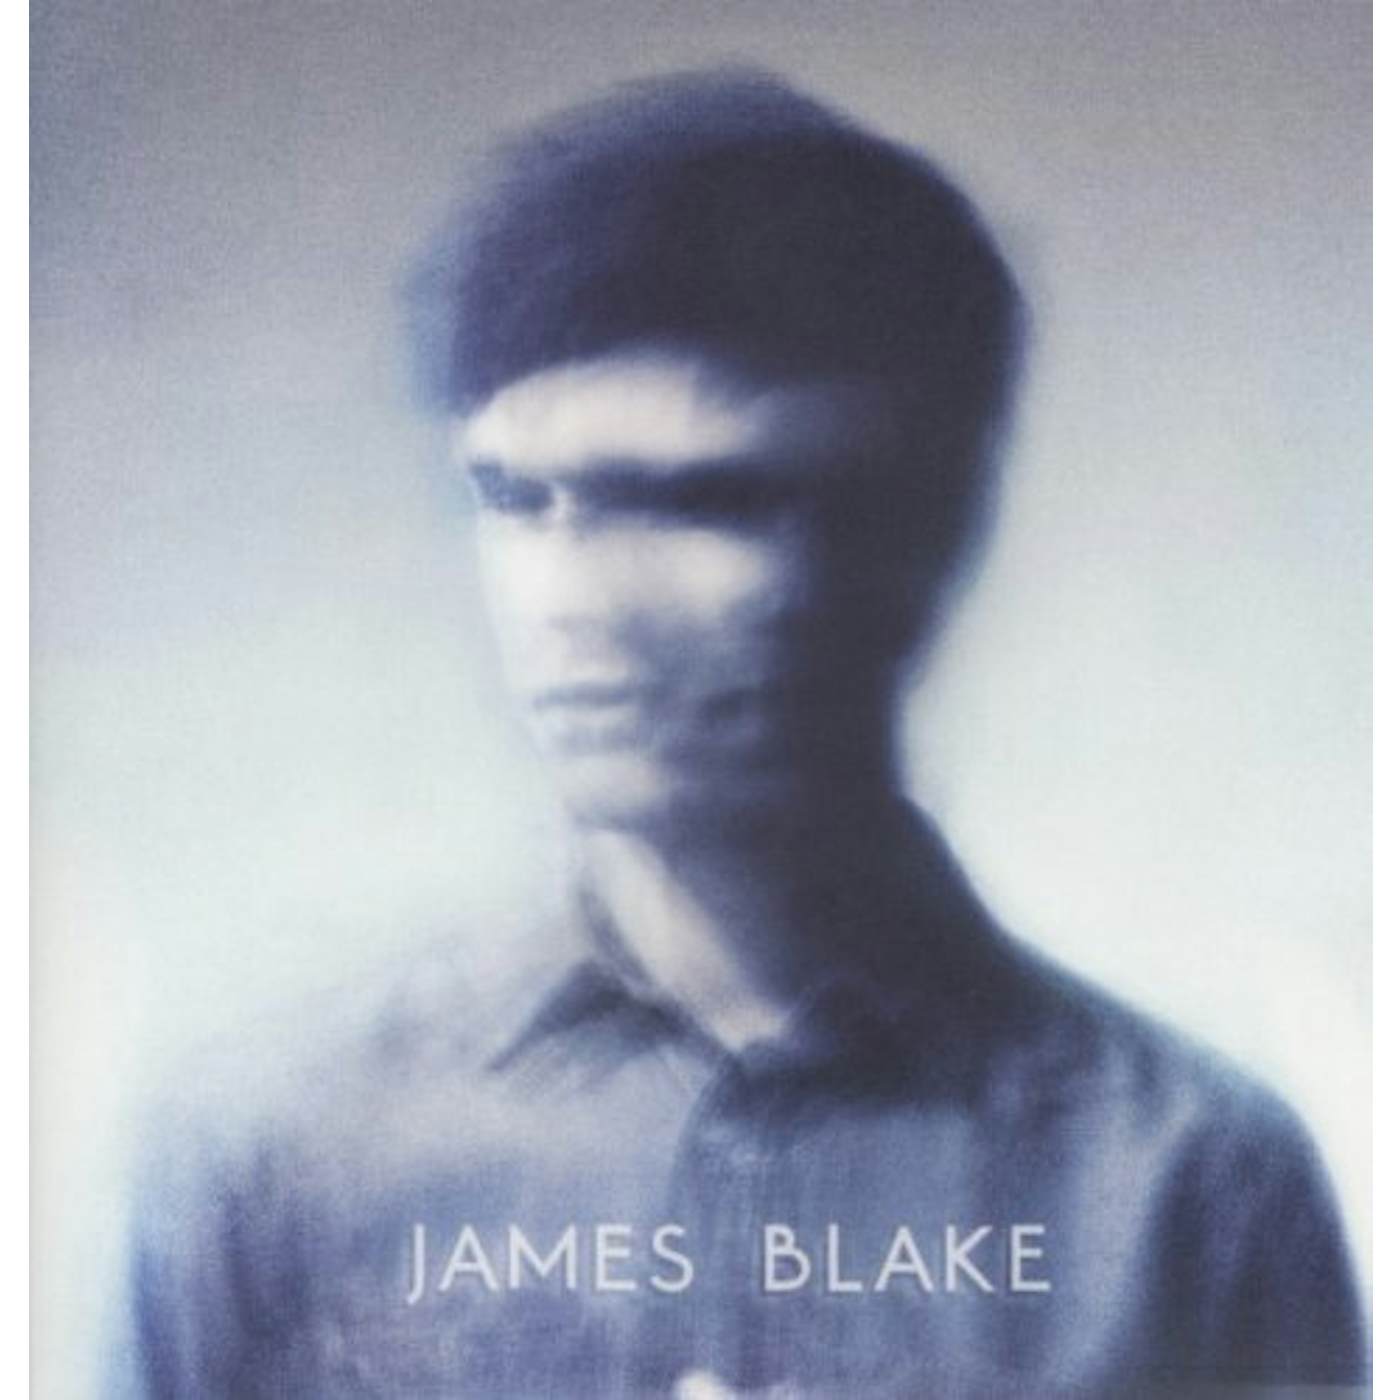 James Blake Vinyl Record